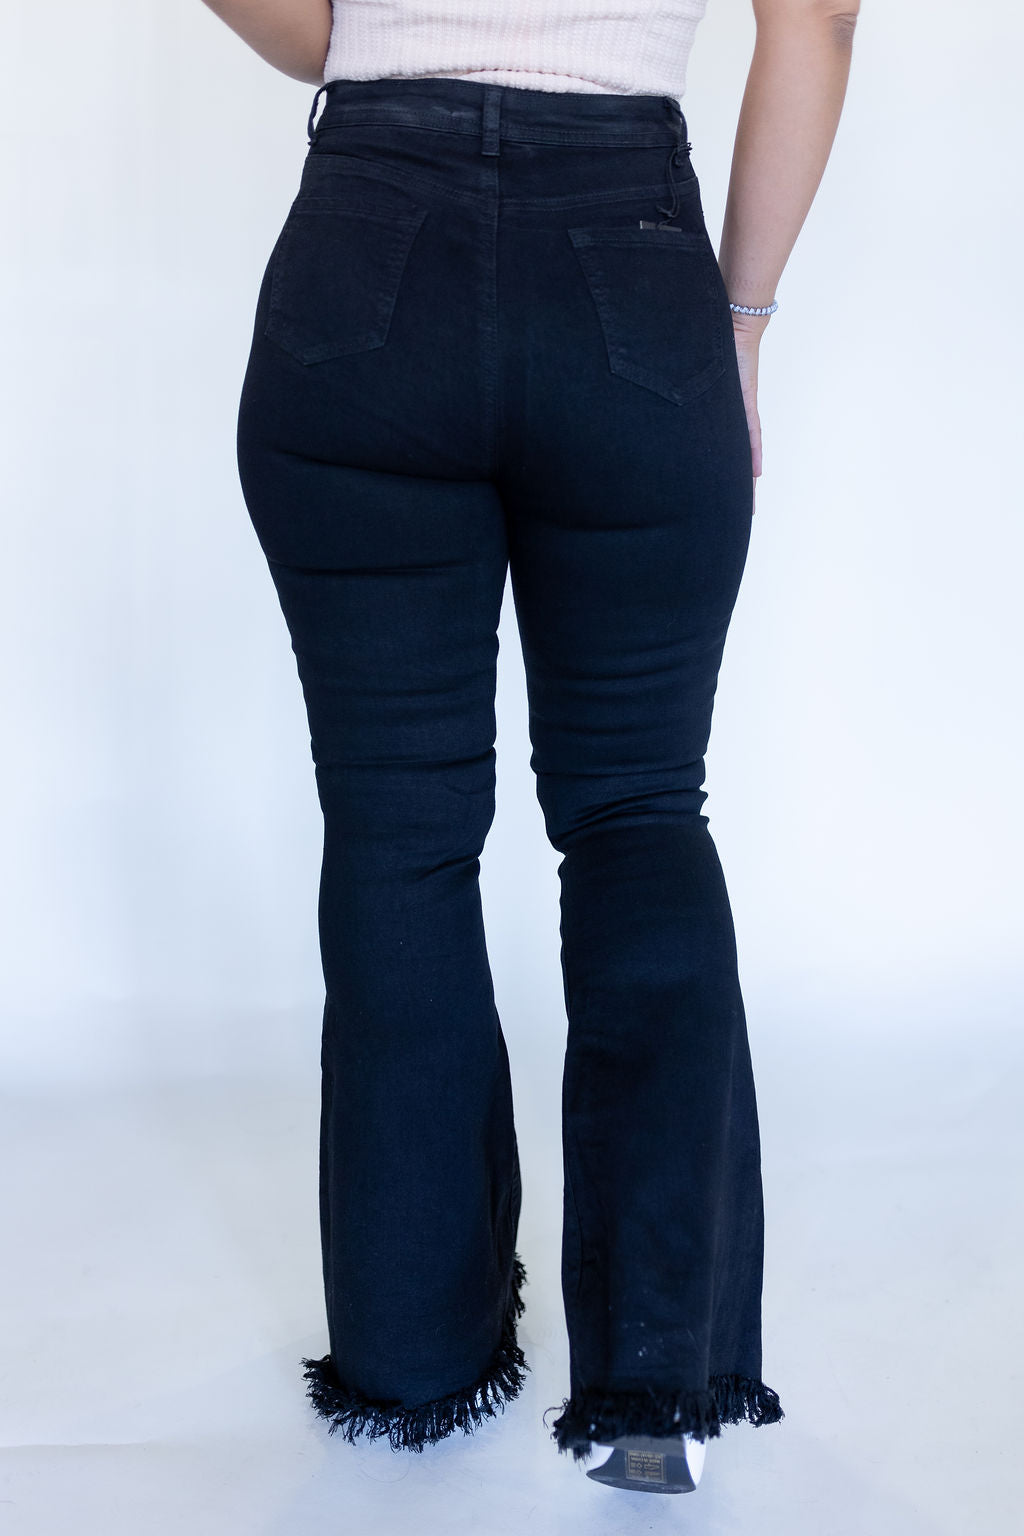 Ripped Knee Black Flares-150 - BOTTOMS - DENIM-JC & JQ-[option4]-[option5]-[option6]-Leather & Lace Boutique Shop